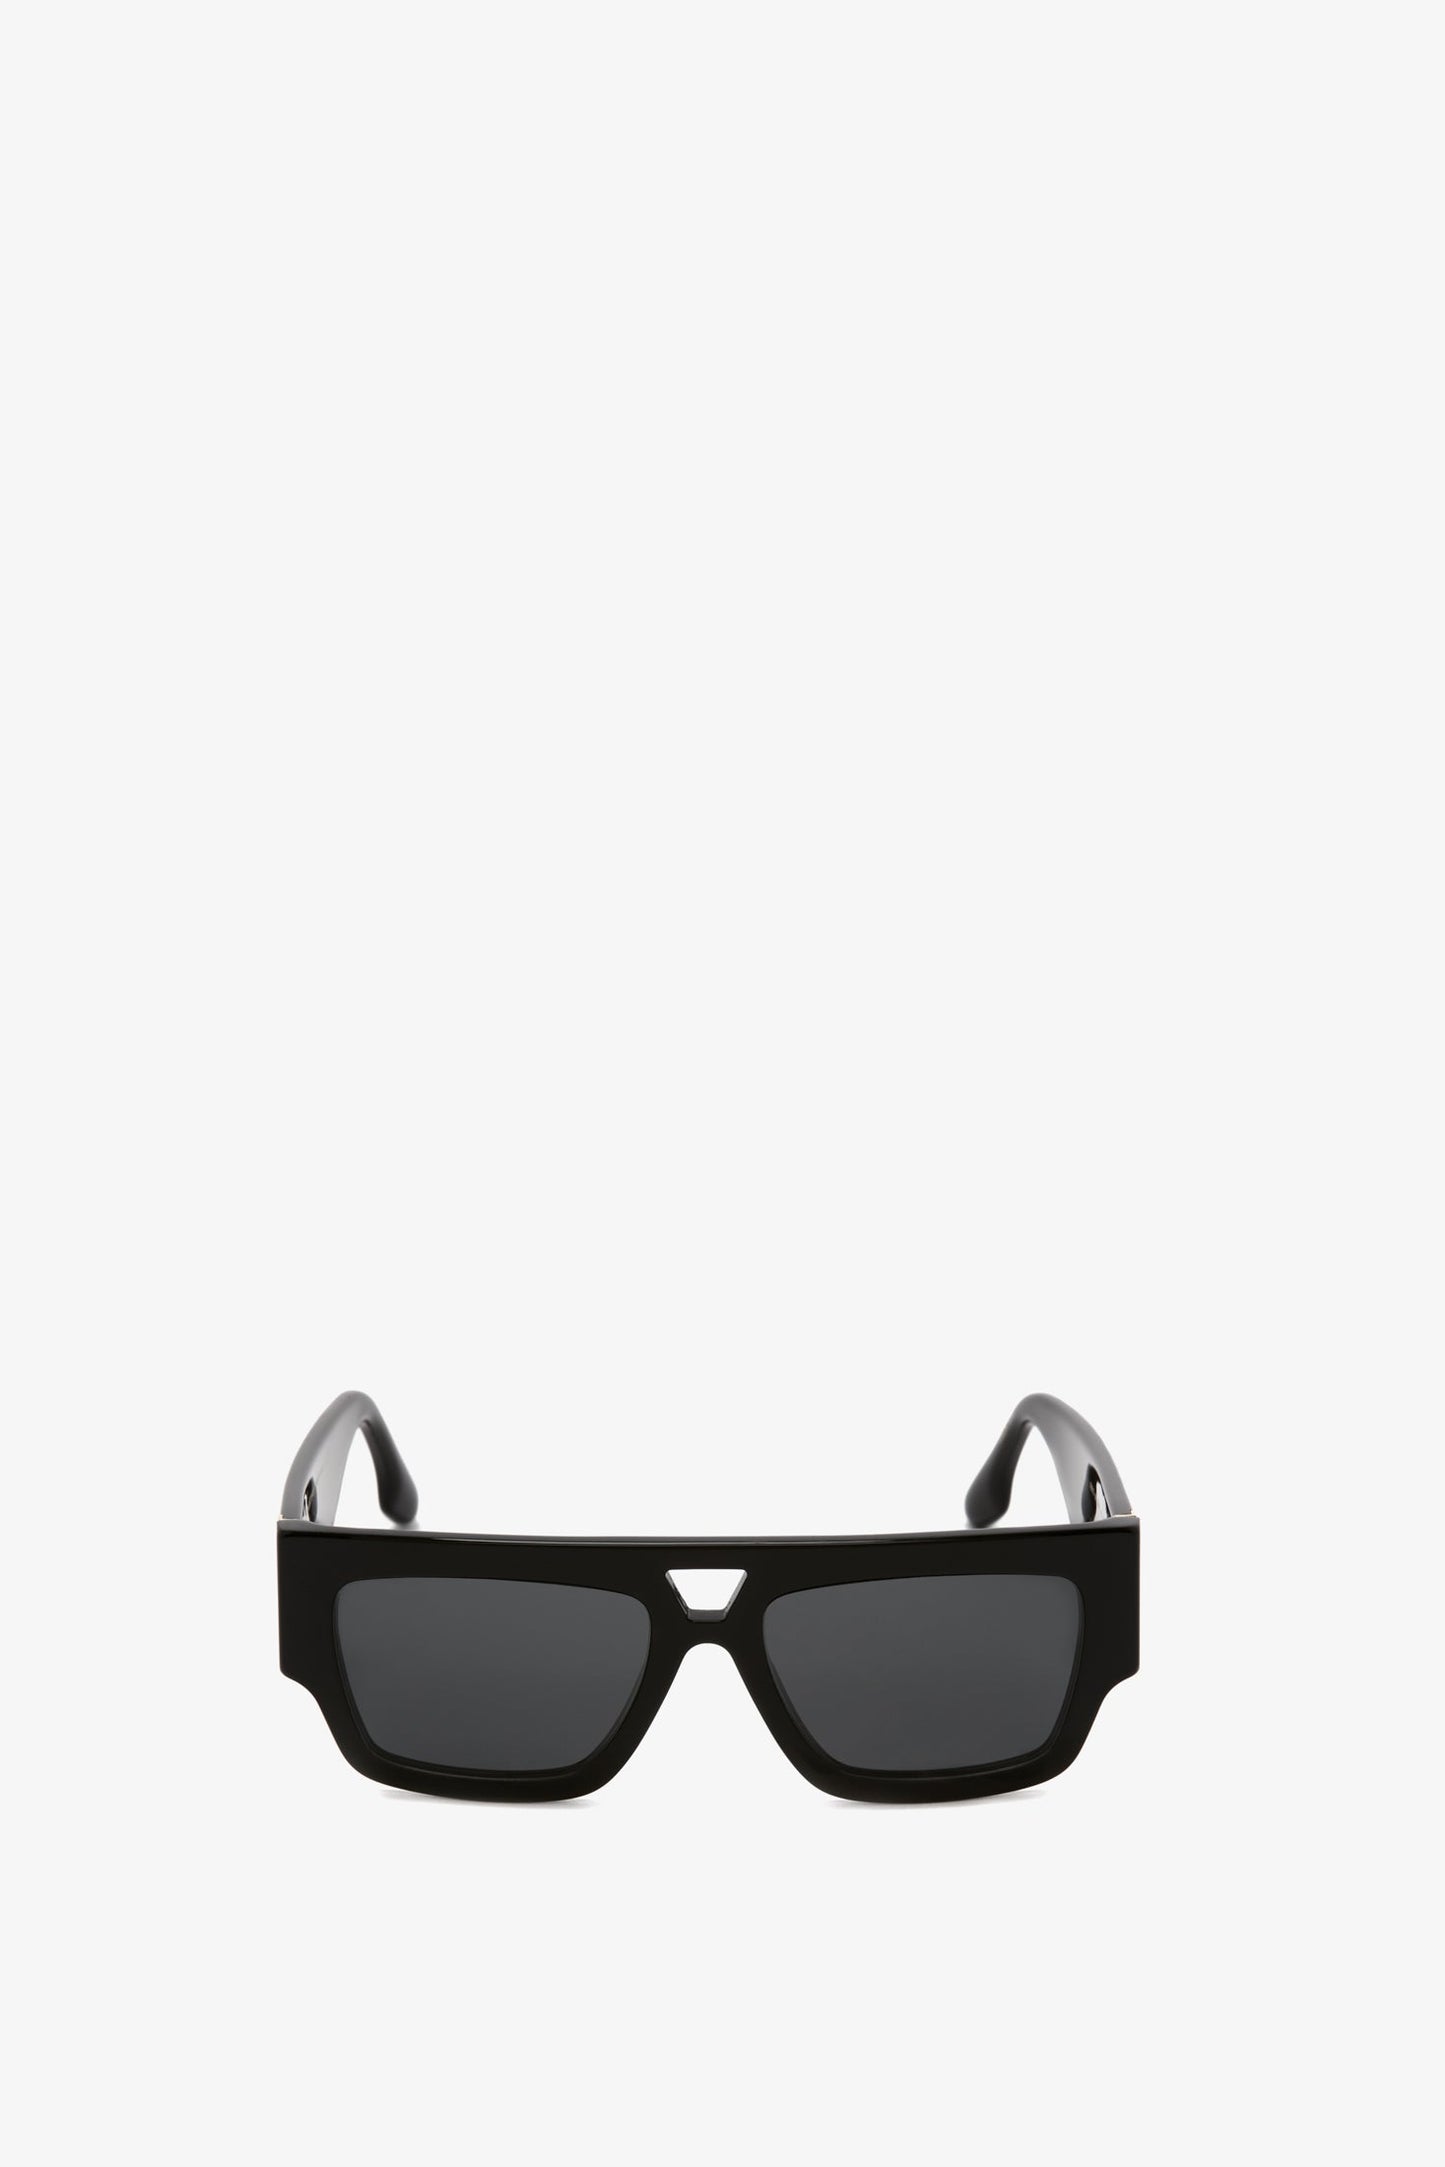 Discover LOUIS VUITTON Fall Winter 2021 Men's Sunglasses